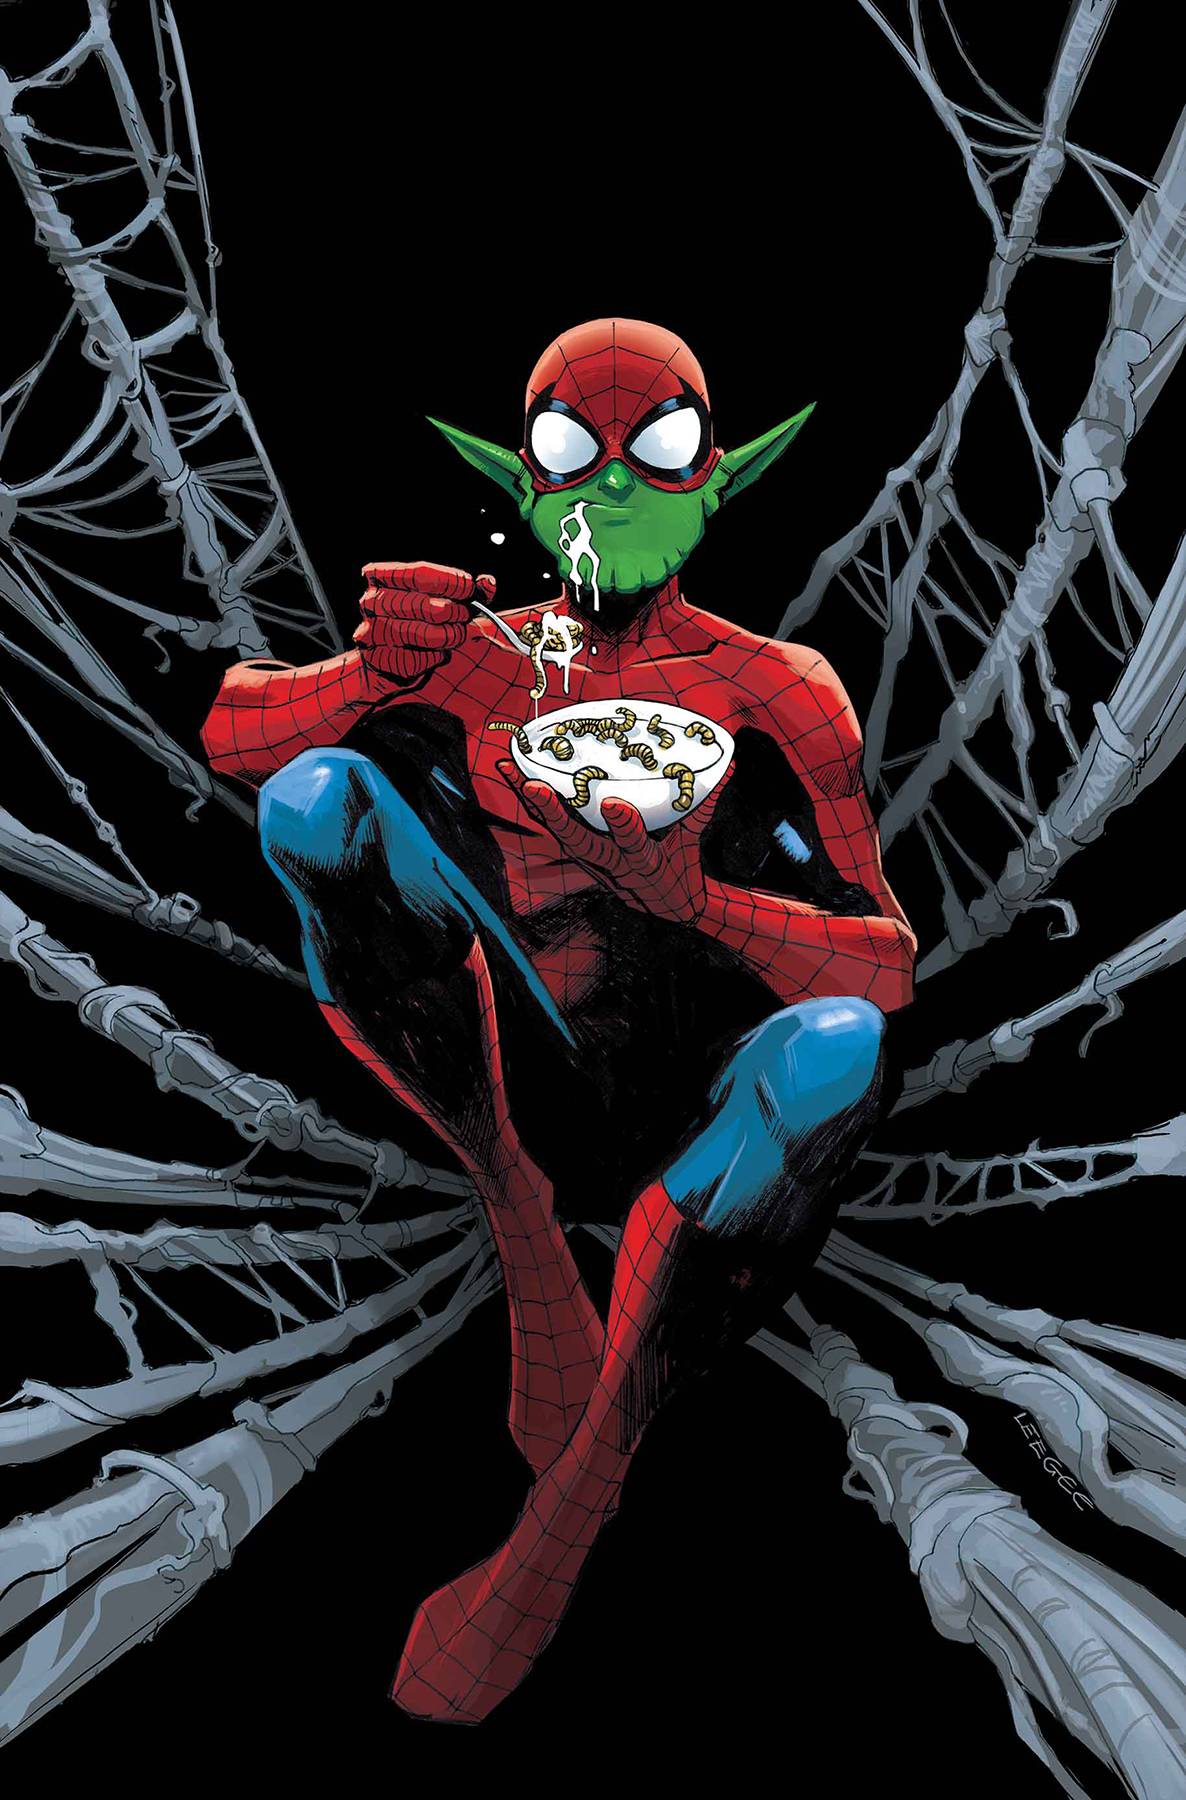 Amazing Spider-Man #15 Garbett Skrulls Variant (2018)